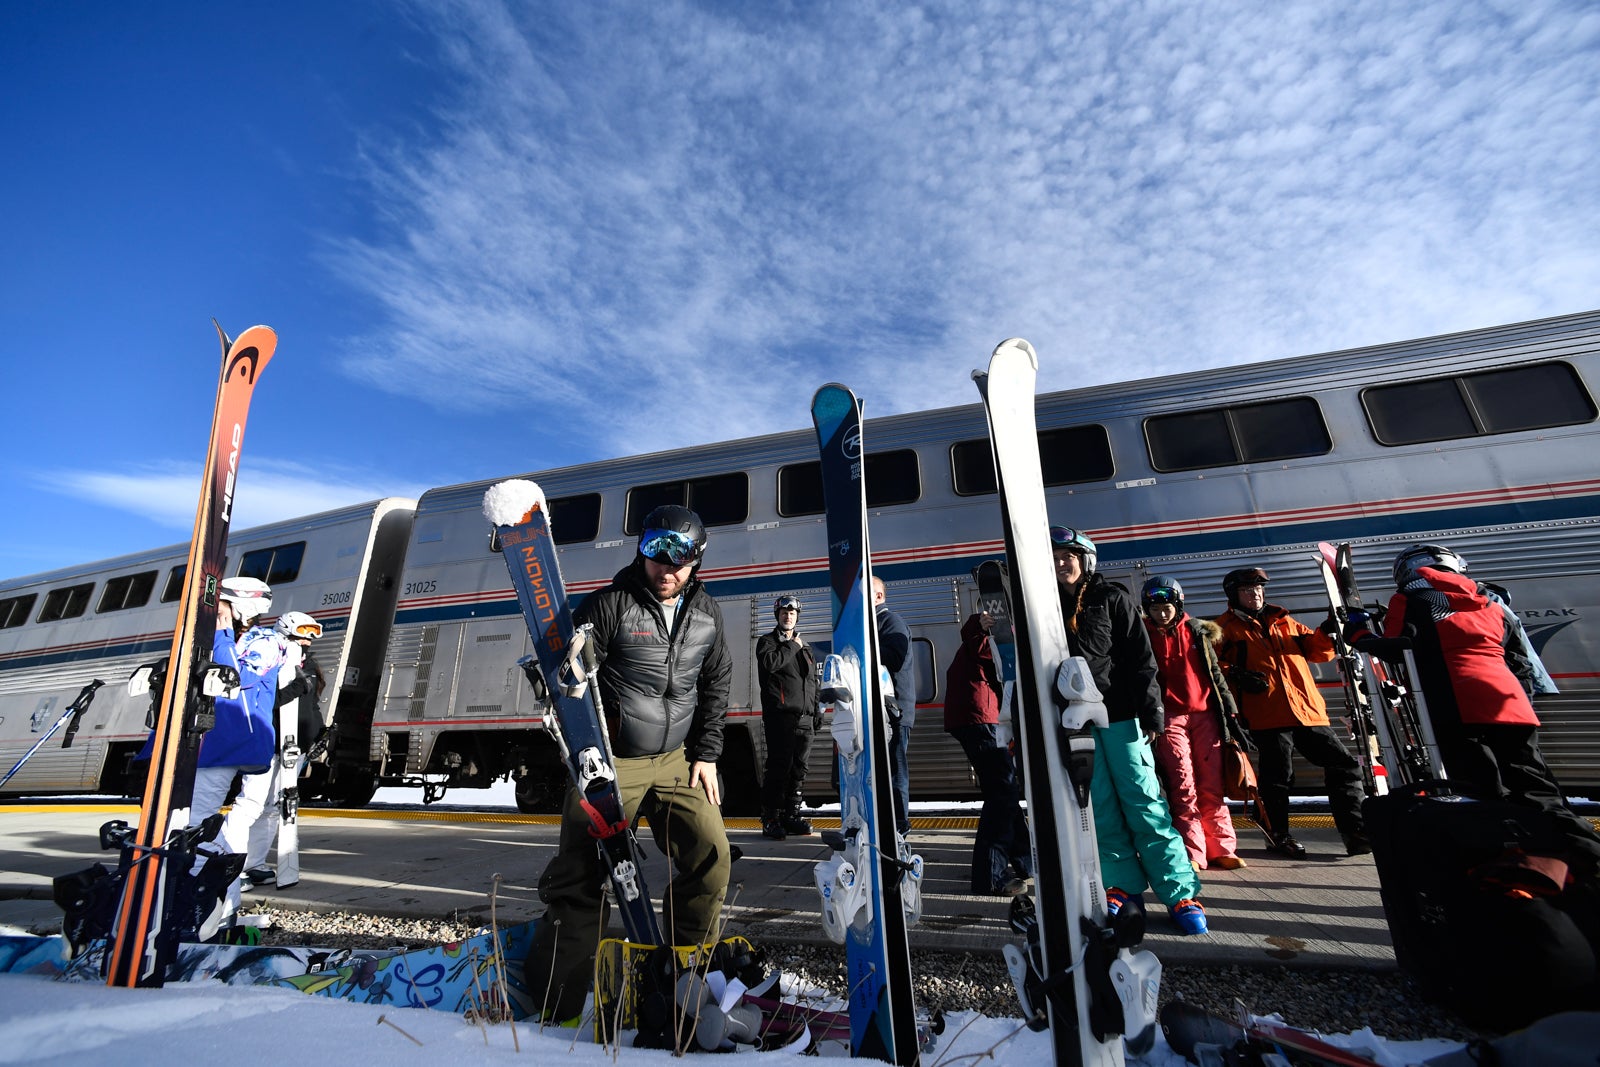 people with ski gear wait next to a train